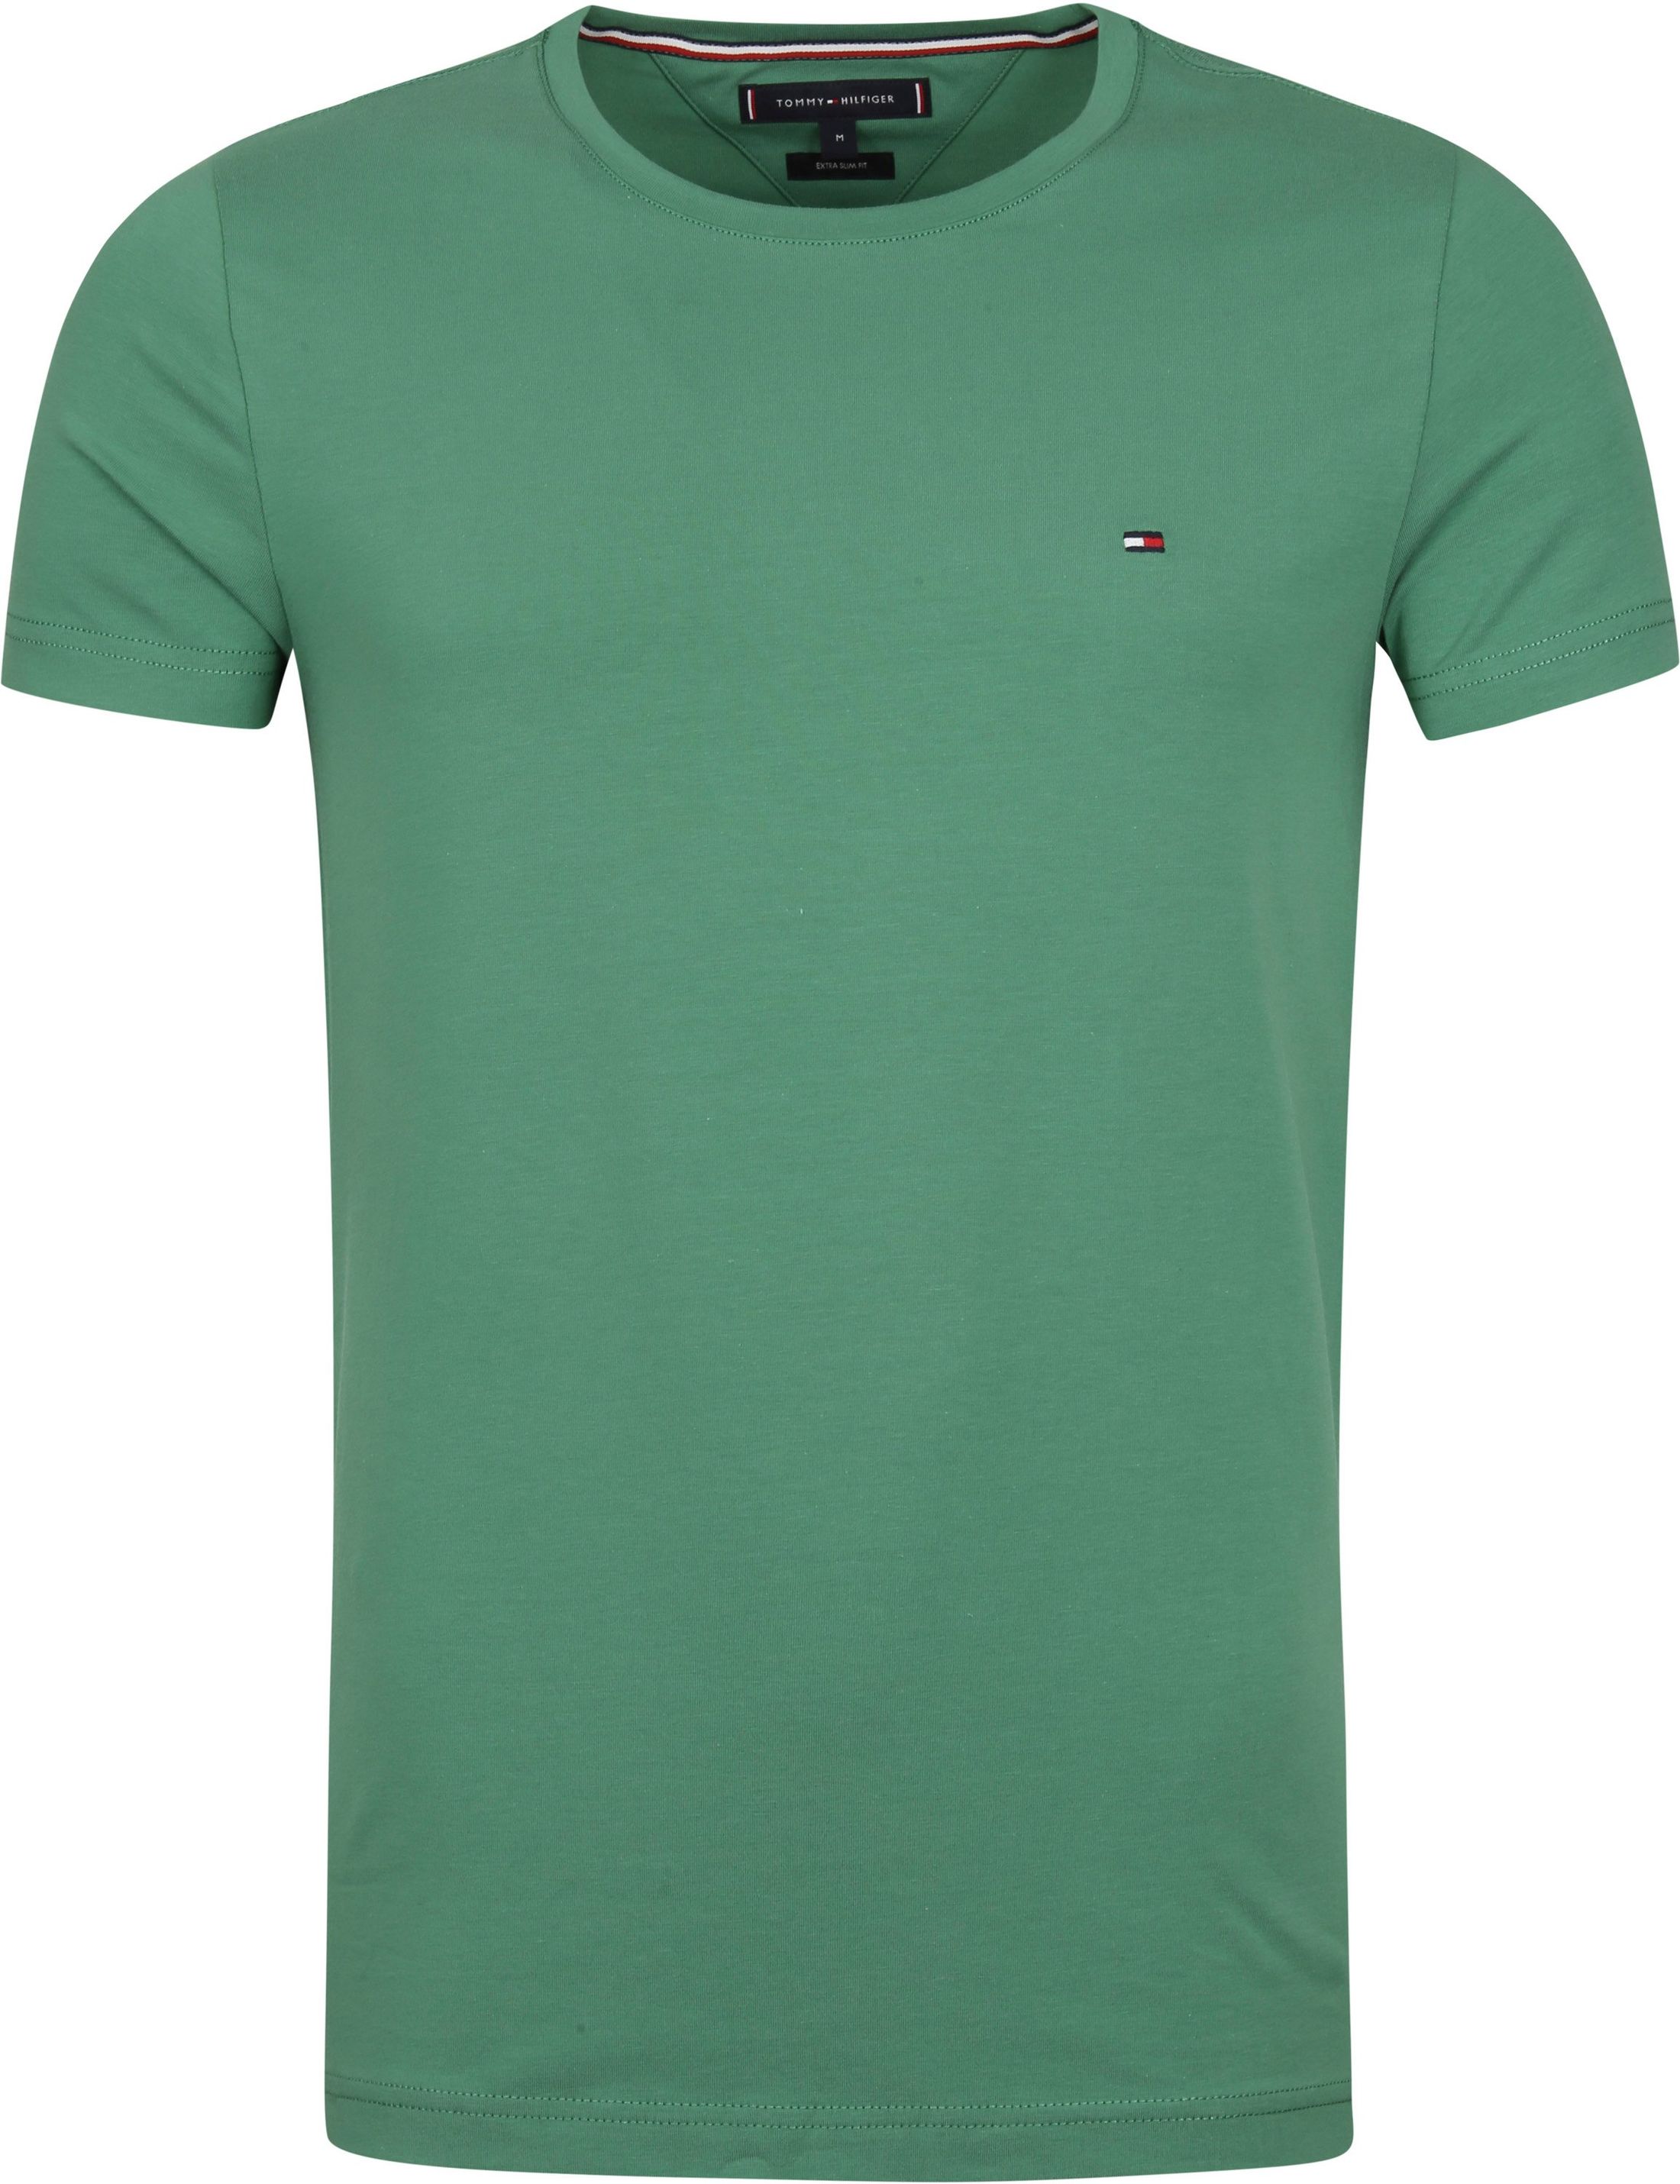 Tommy Hilfiger T-shirt Stretch Green size L